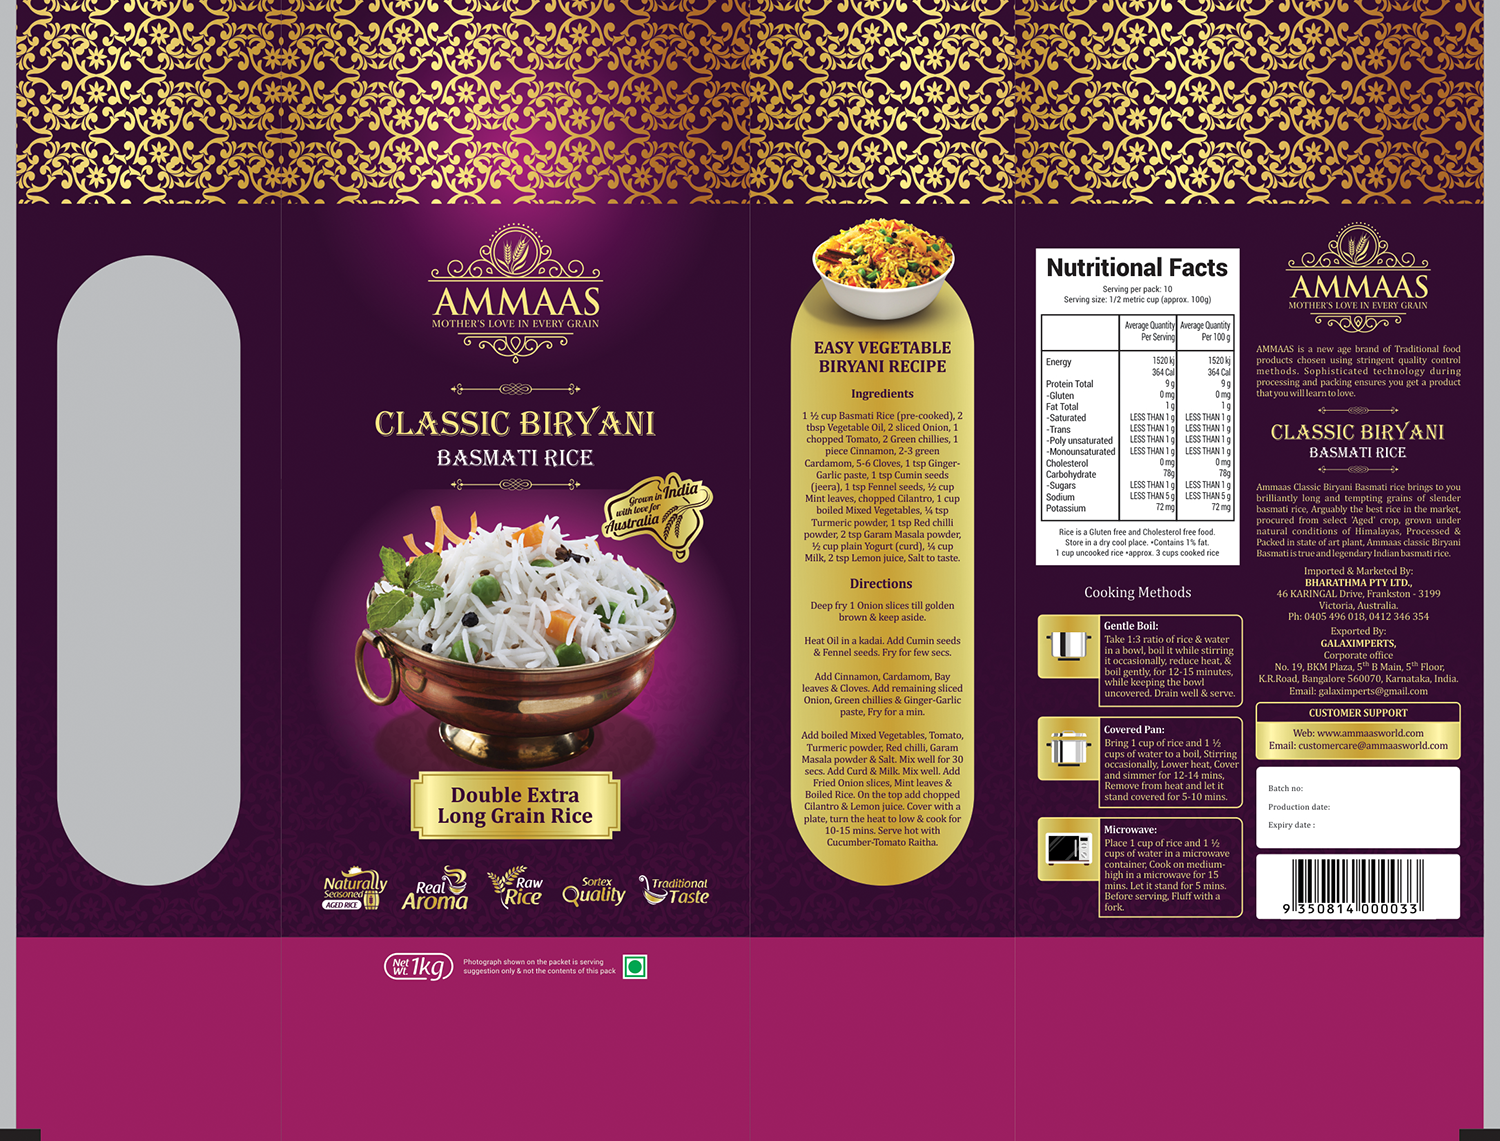 Ammaas Classic Biryani Basmati Rice Bag Design And Premium Aromatic Basmati Rice Bag Design.